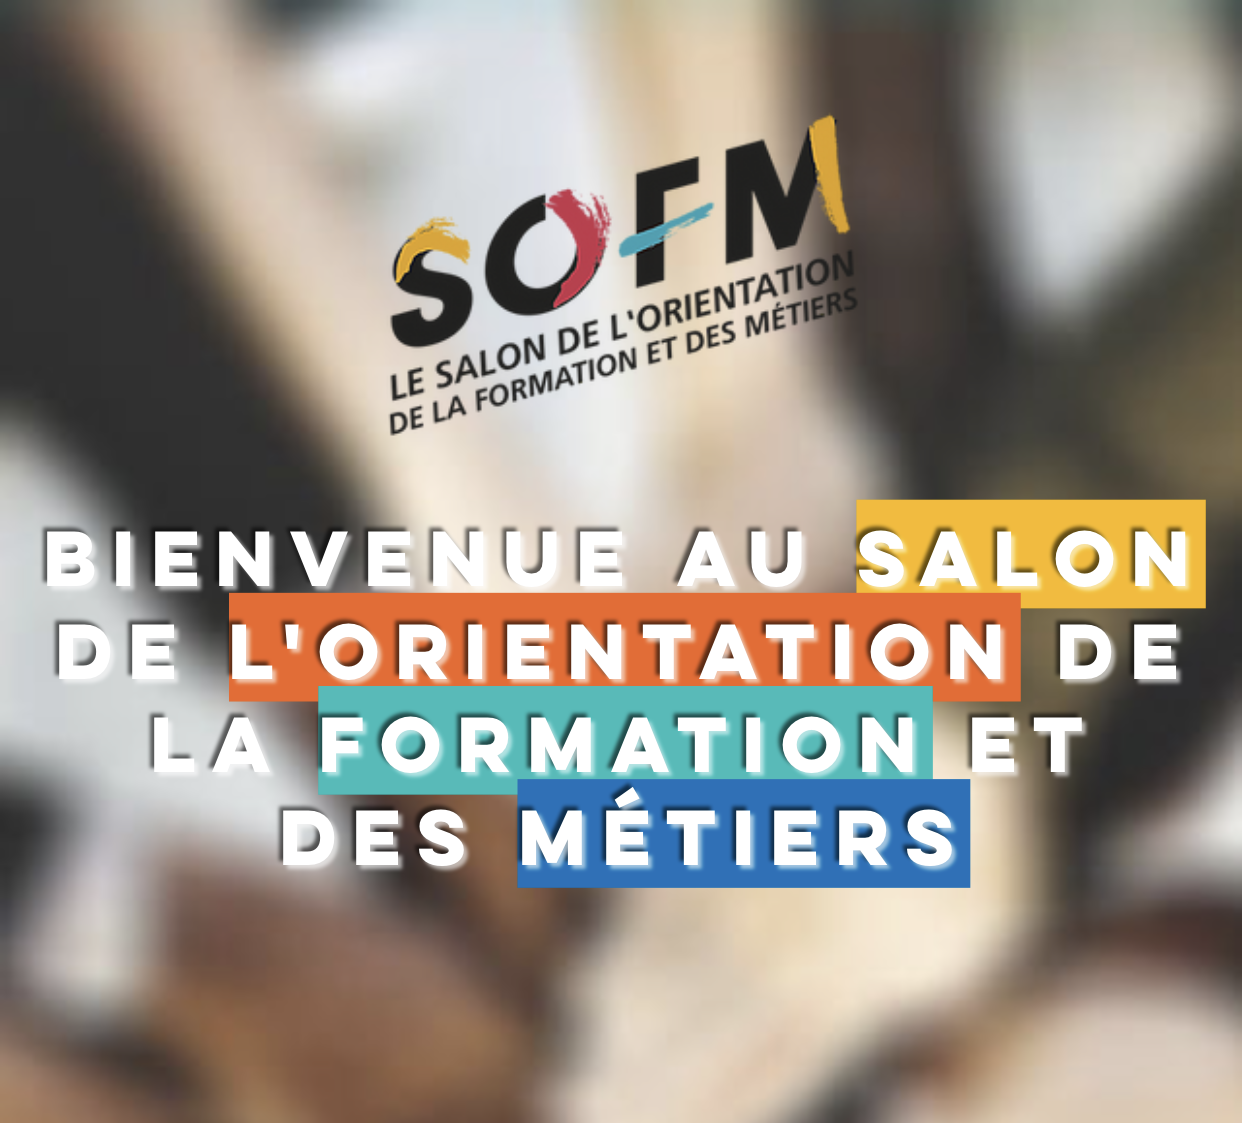     SOFM : salon 100% en ligne

